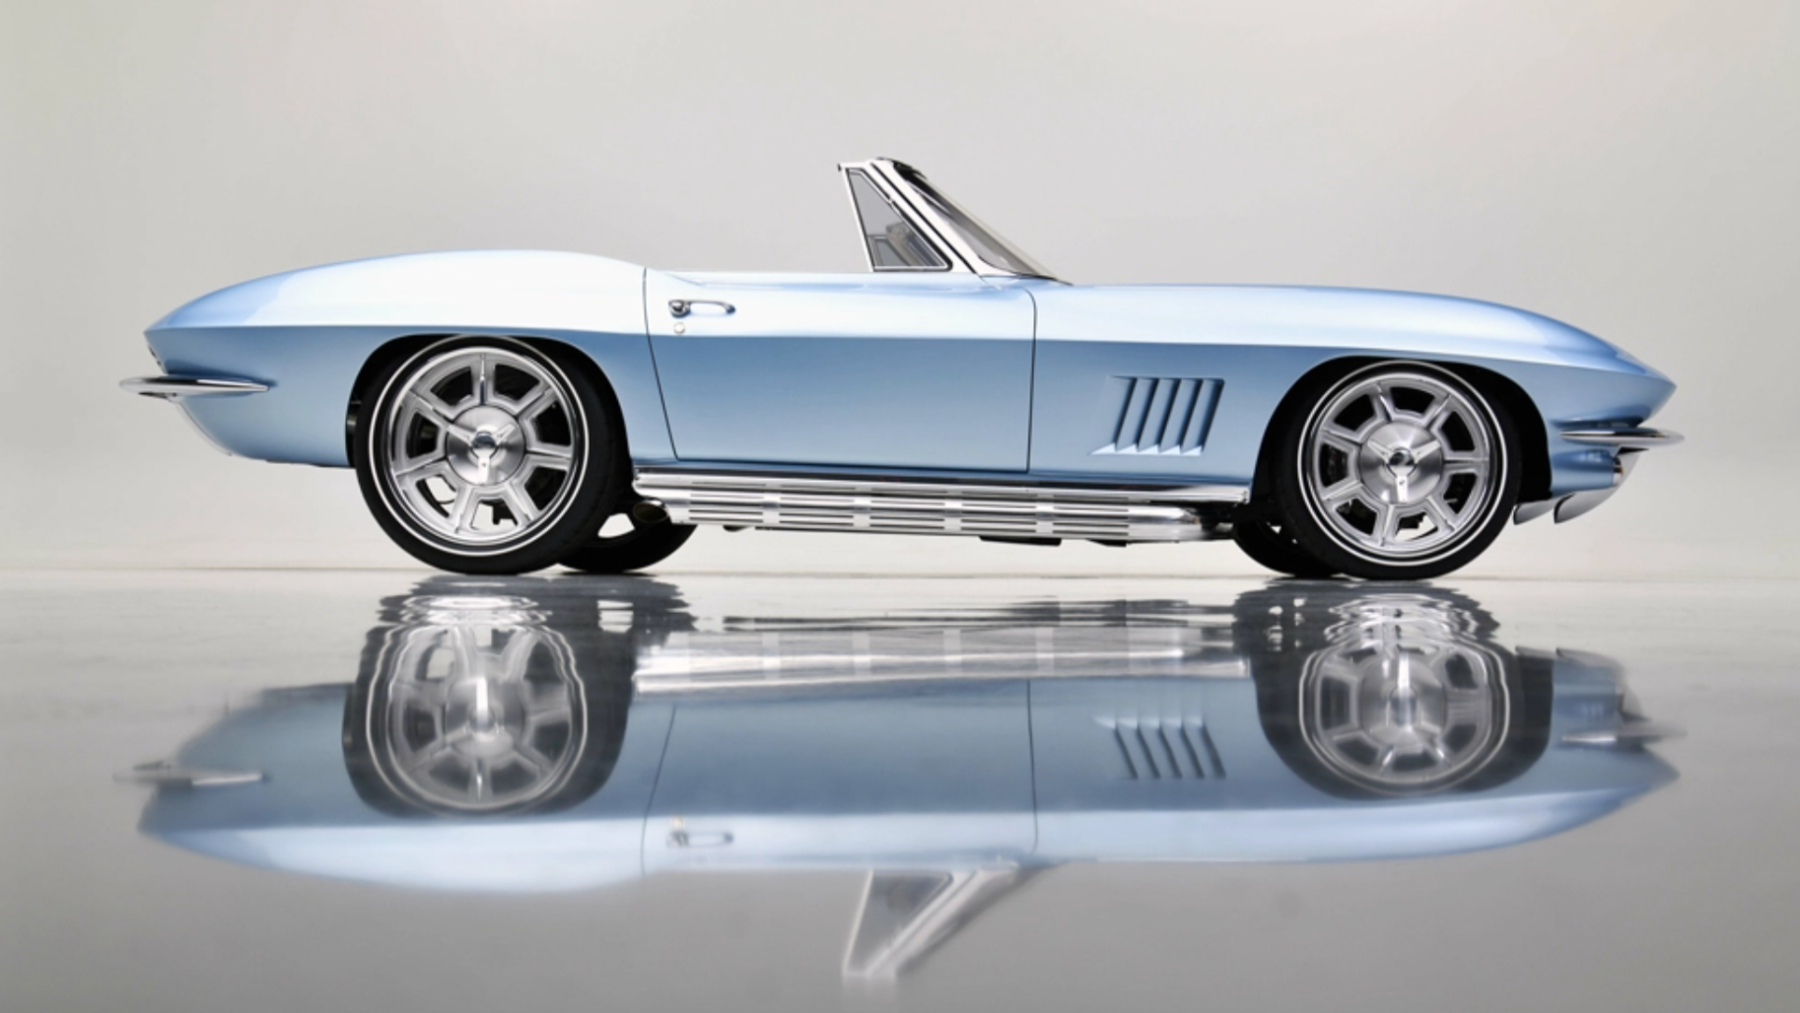 Corvette Convertible Restomod de 1967